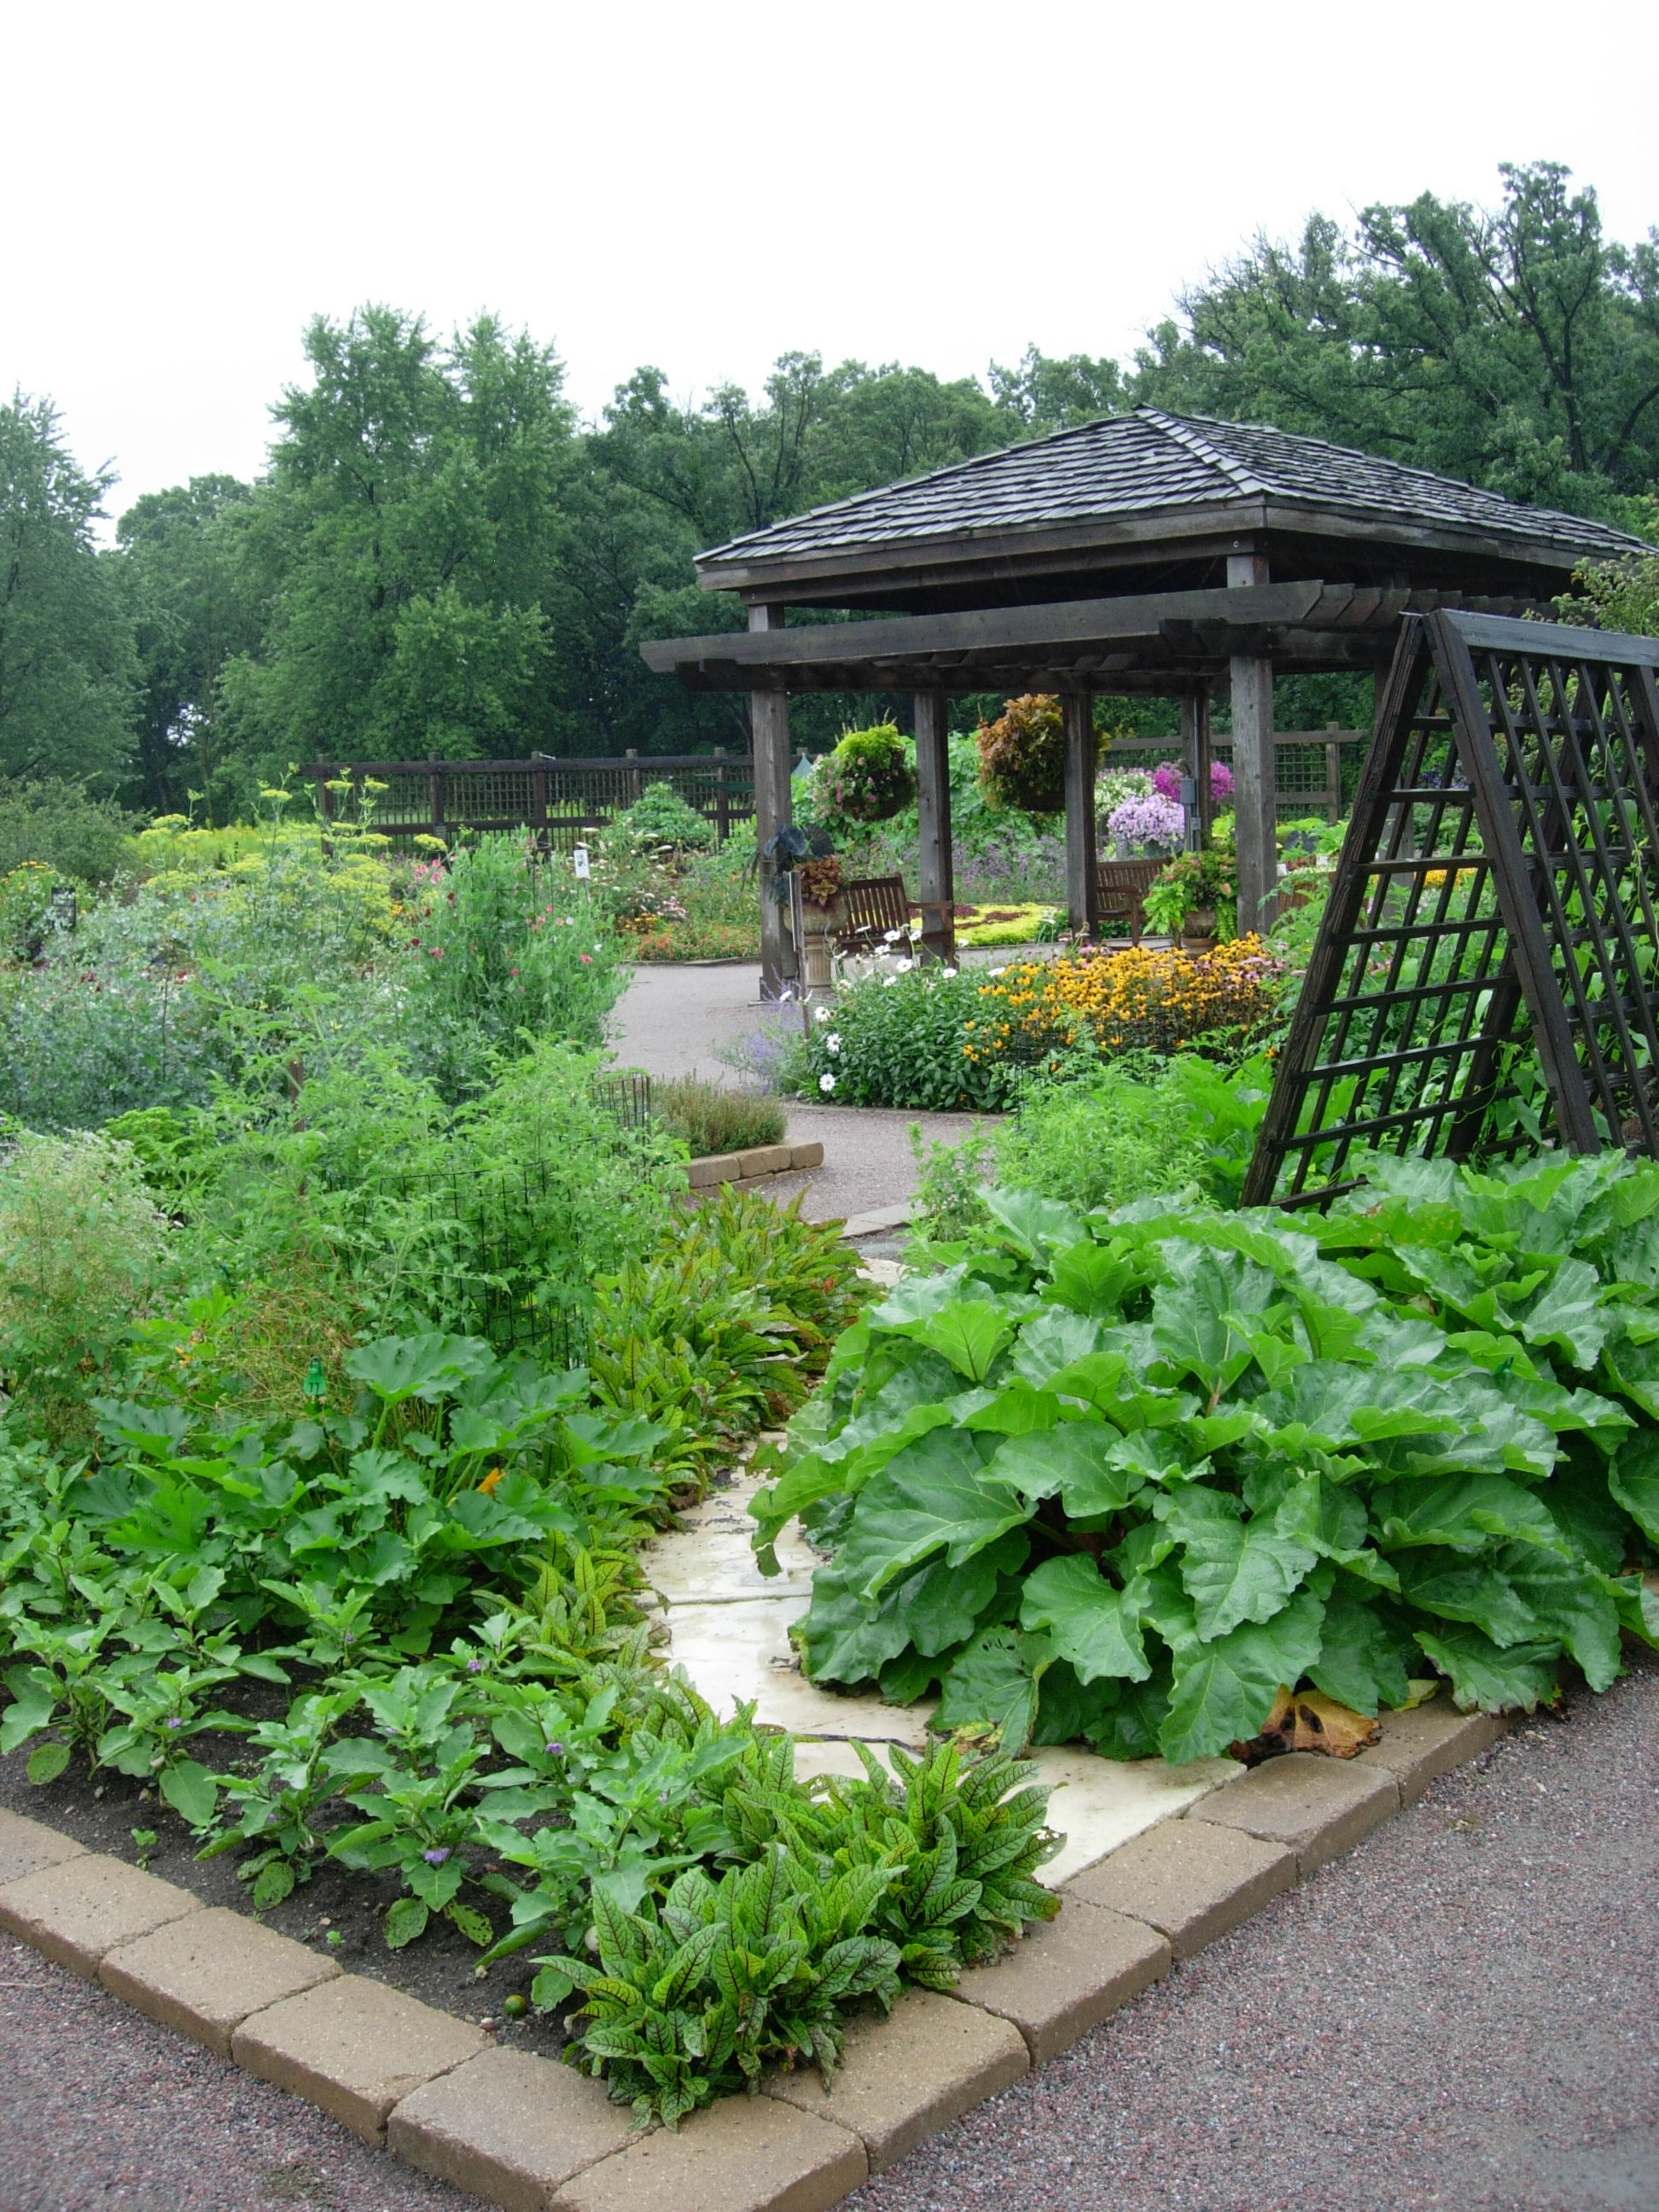 Best ideas about Backyard Vegetable Garden
. Save or Pin Interior Design Now.